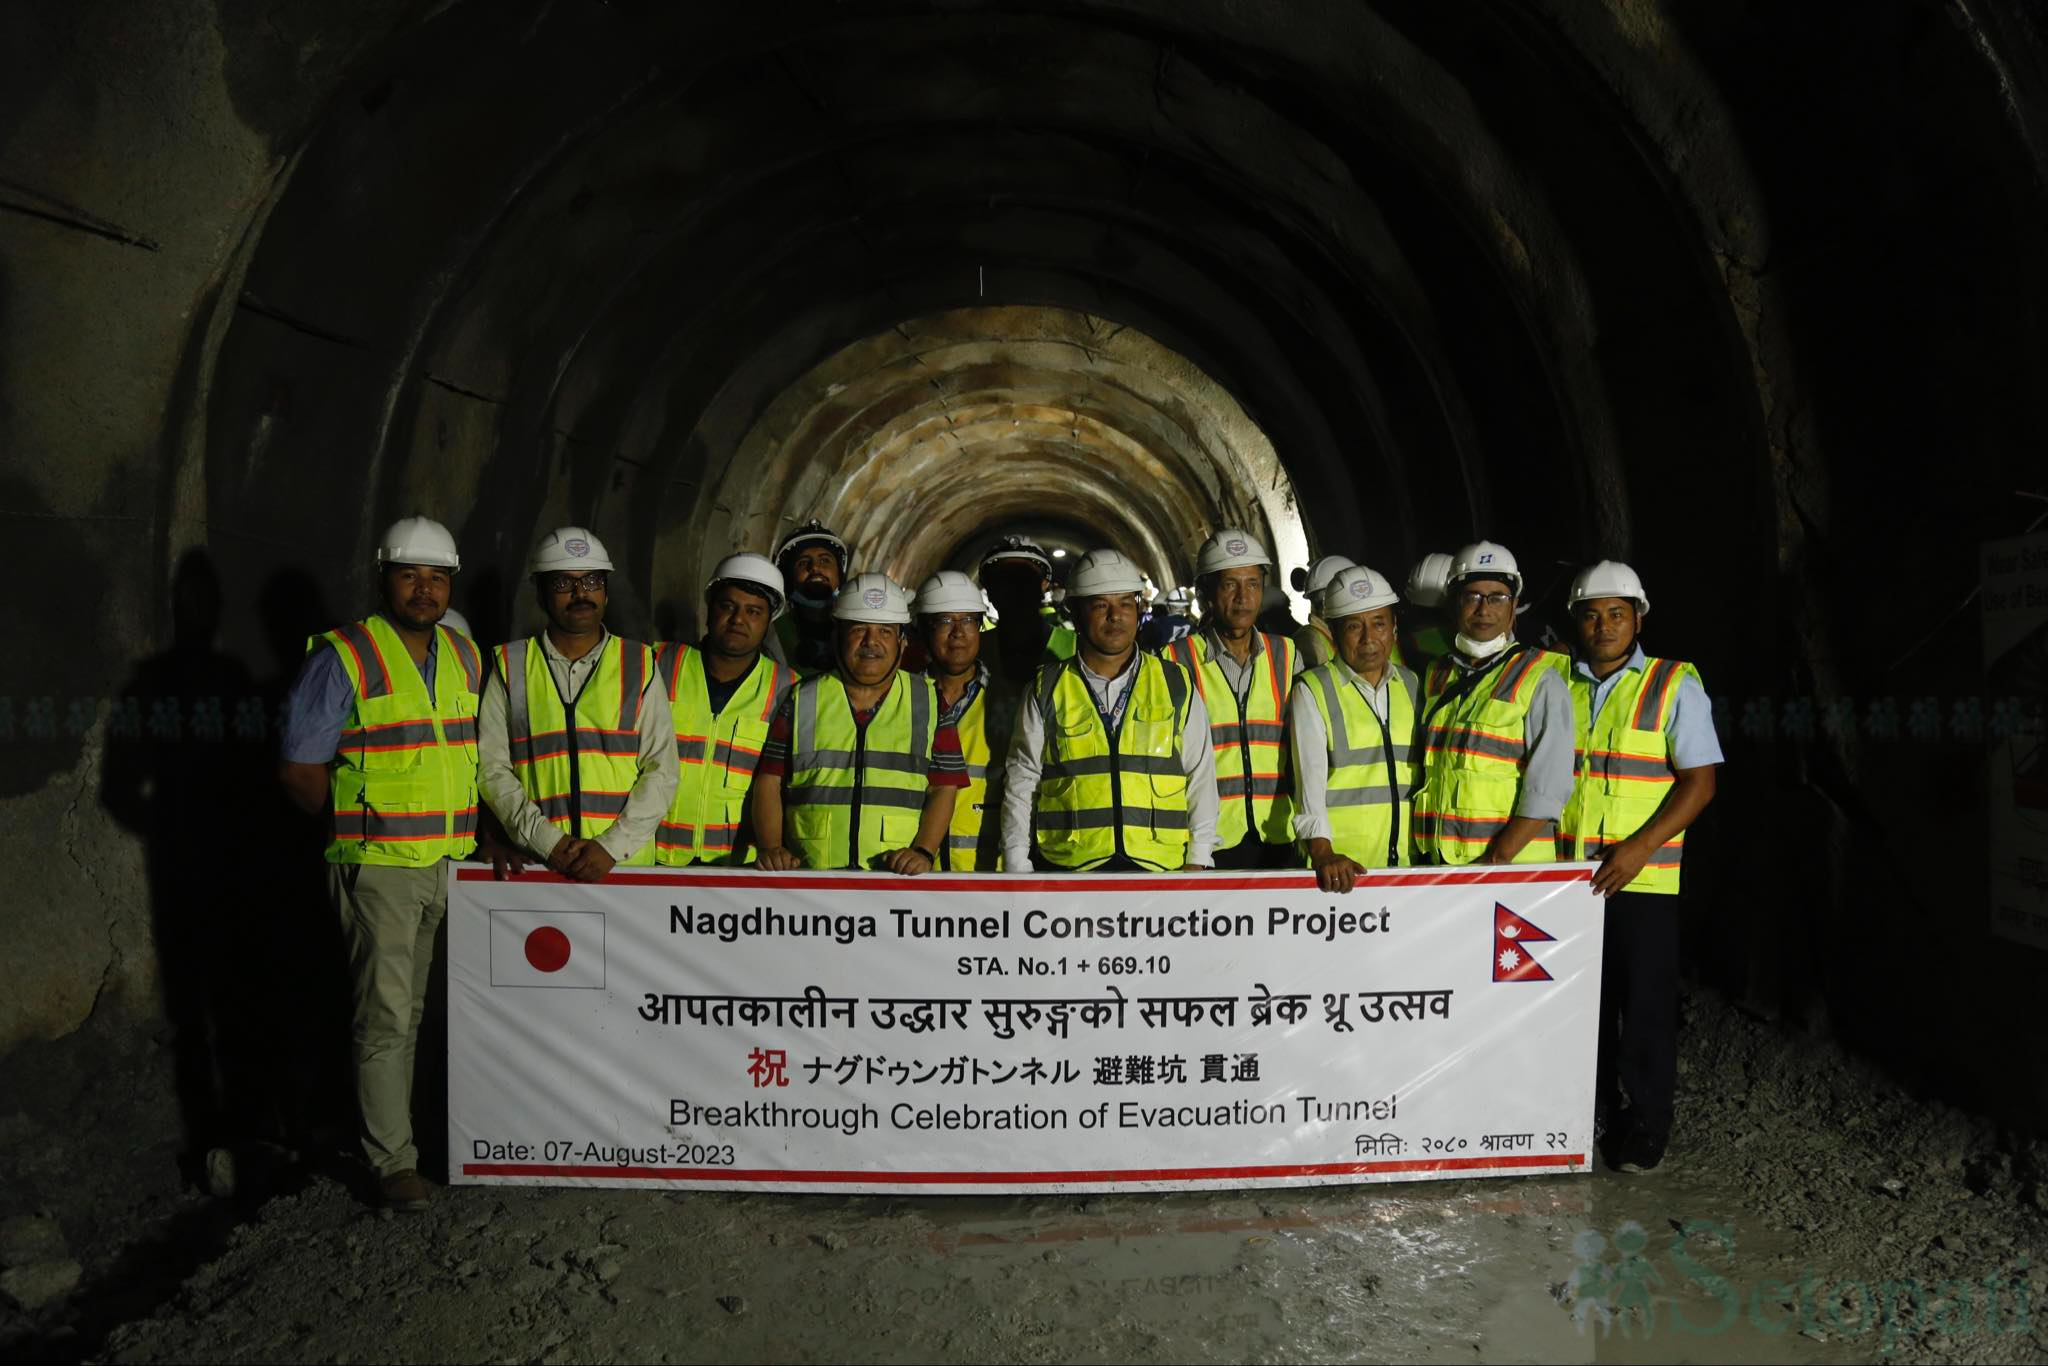 Nagdhuga-Sisnekhola-Evacuation-Tunnel-Breakthrough-11.jpg